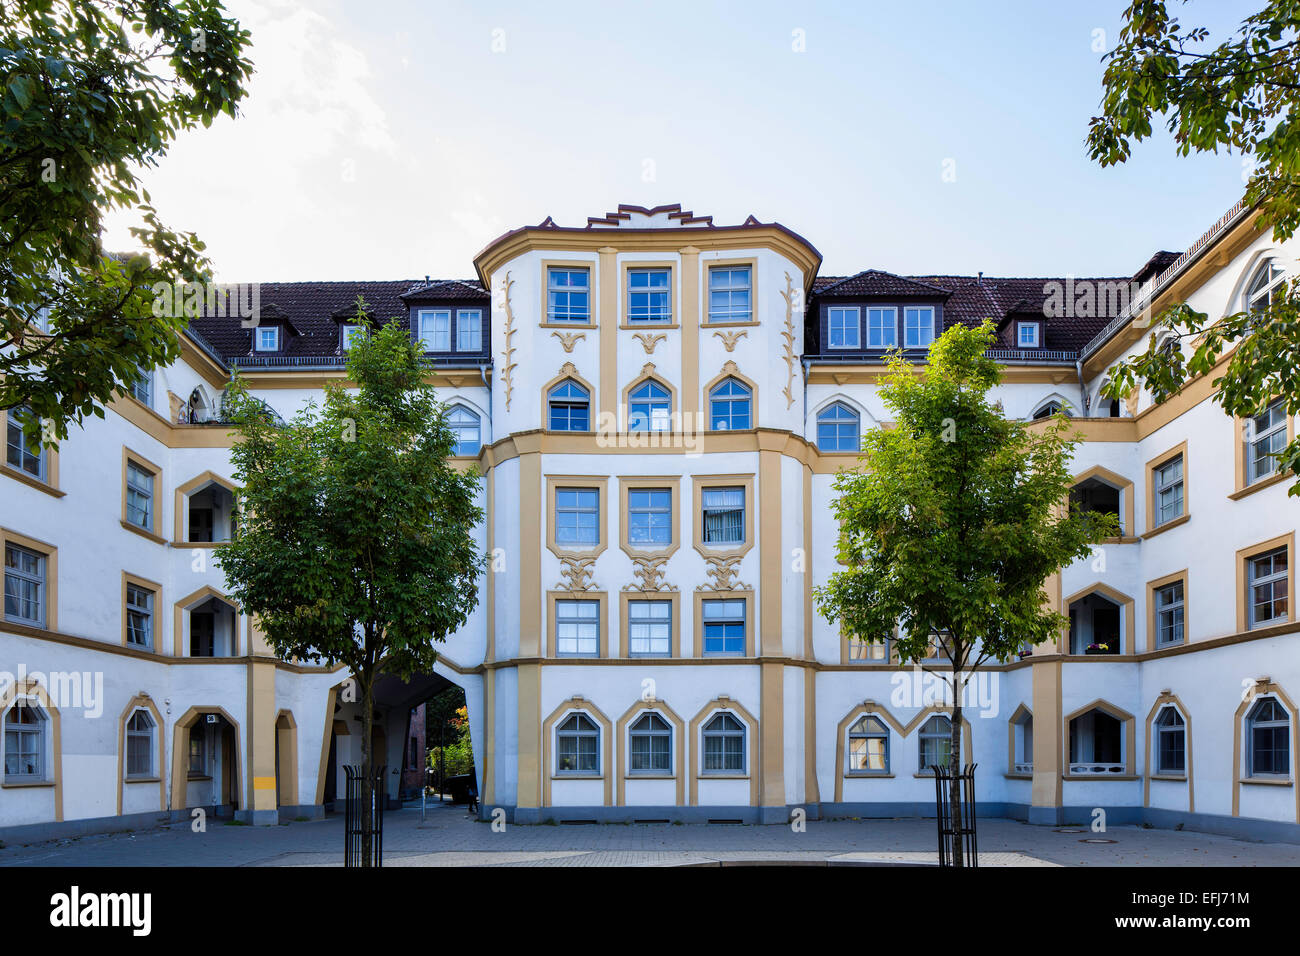 Mannesallee trimestre dans le style expressionniste, Wilhelmsburg, Hambourg, Allemagne Banque D'Images